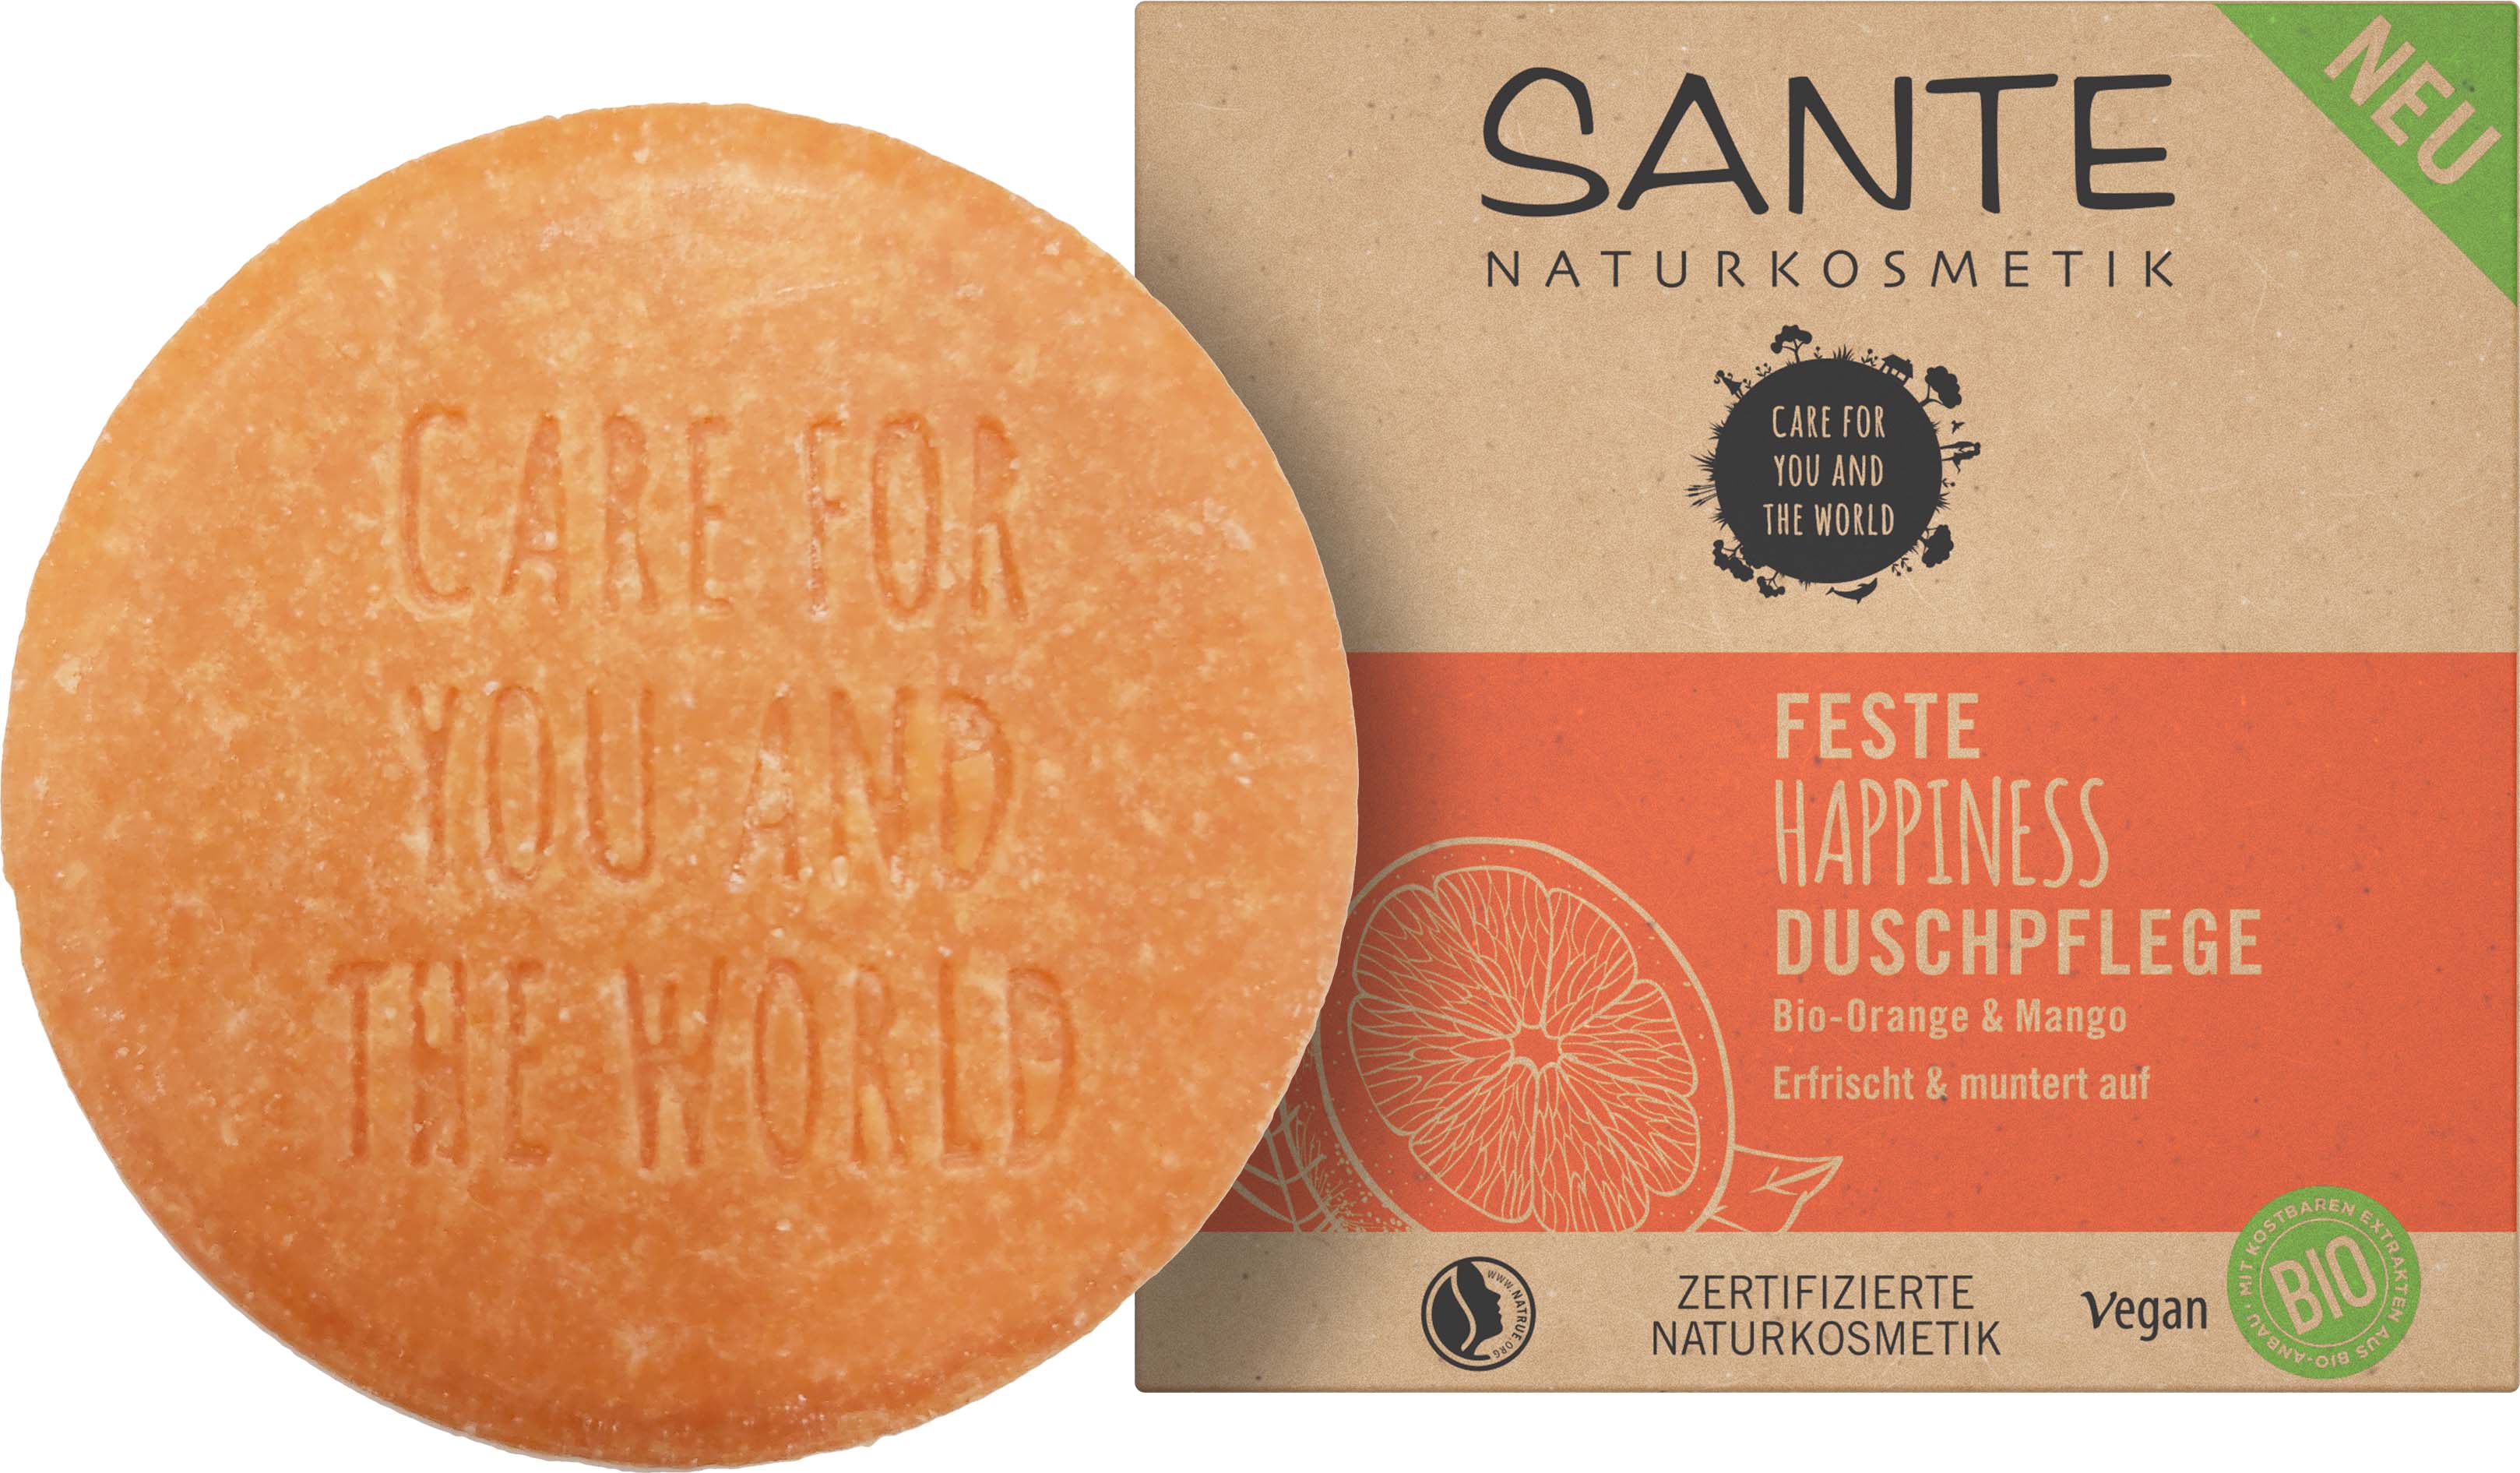 Feste HAPPINESS Duschpflege Bio-Orange & Mango | SANTE Naturkosmetik